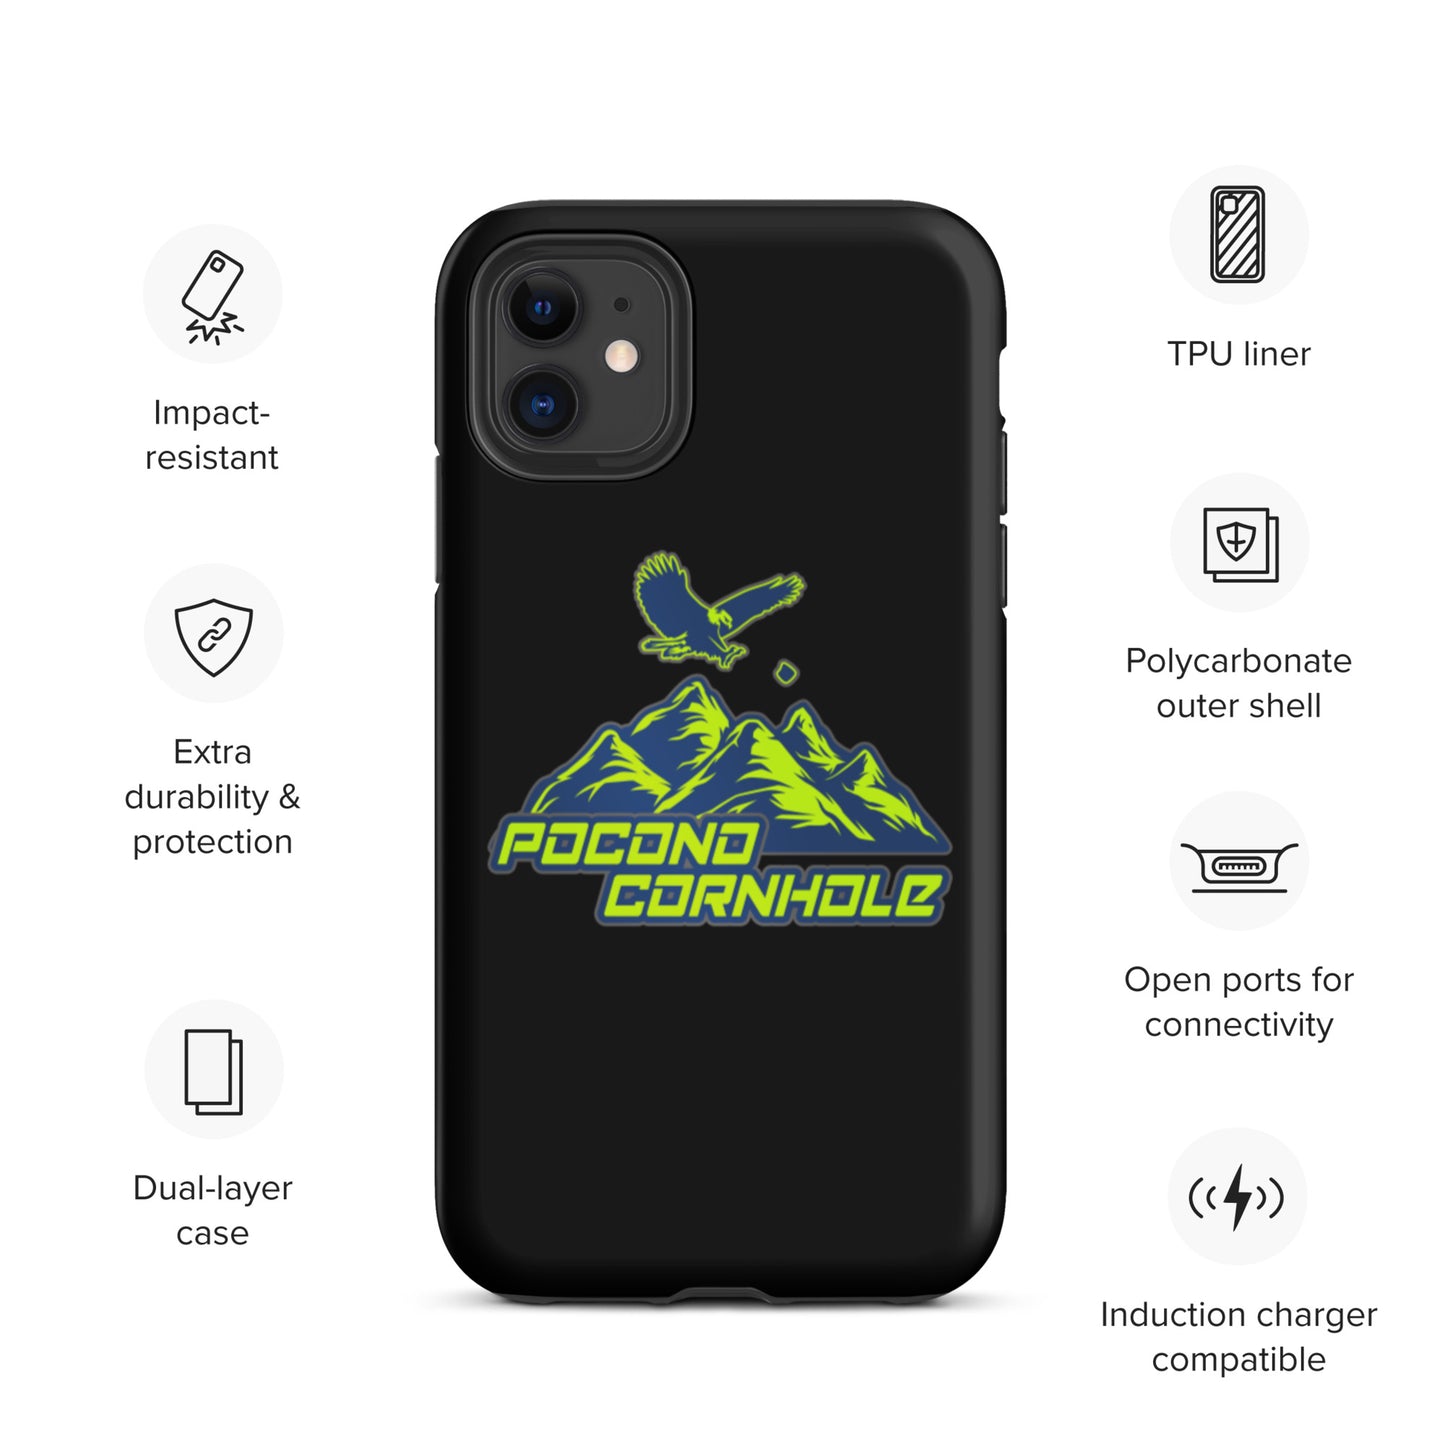 Pocono Cornhole Tough iPhone case